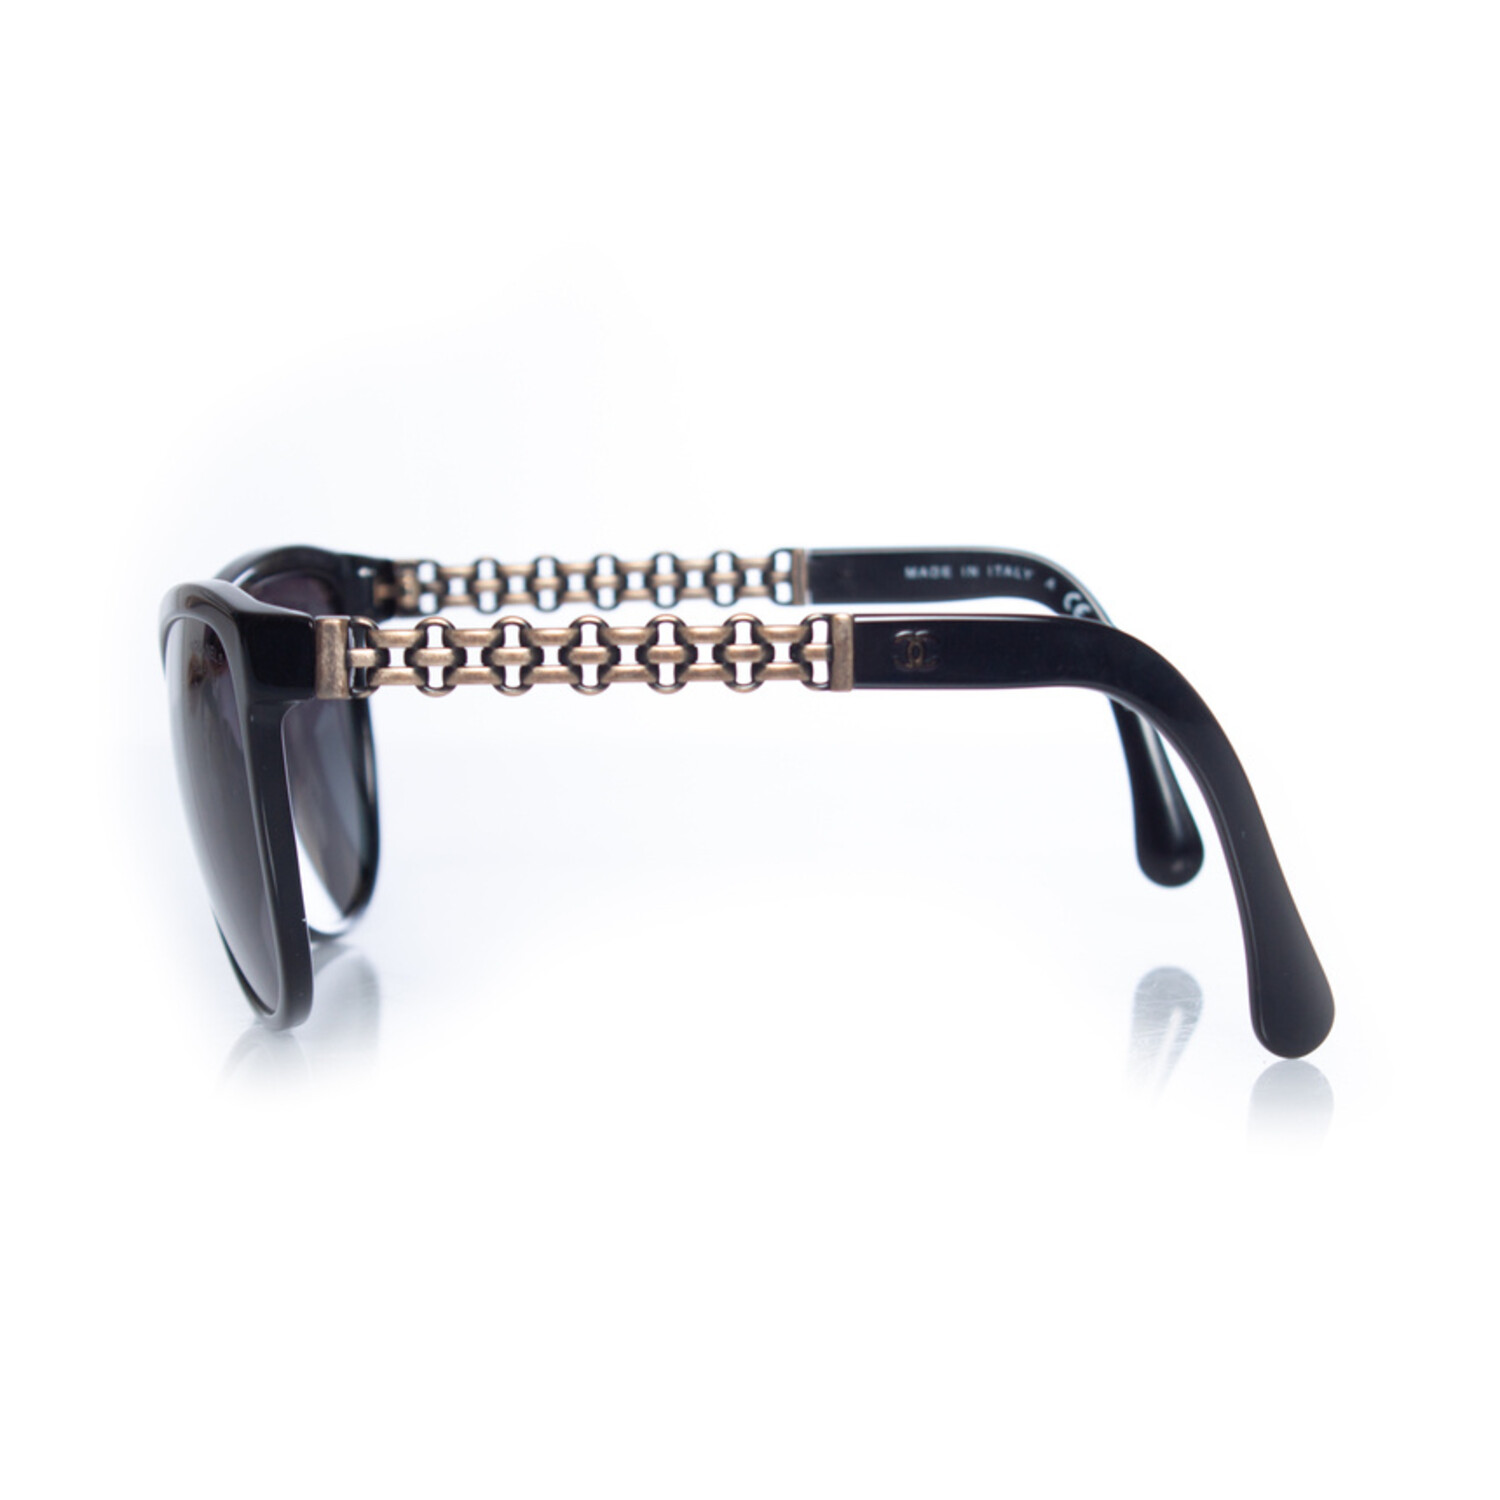 Chanel, Black chain sunglasses - Unique Designer Pieces